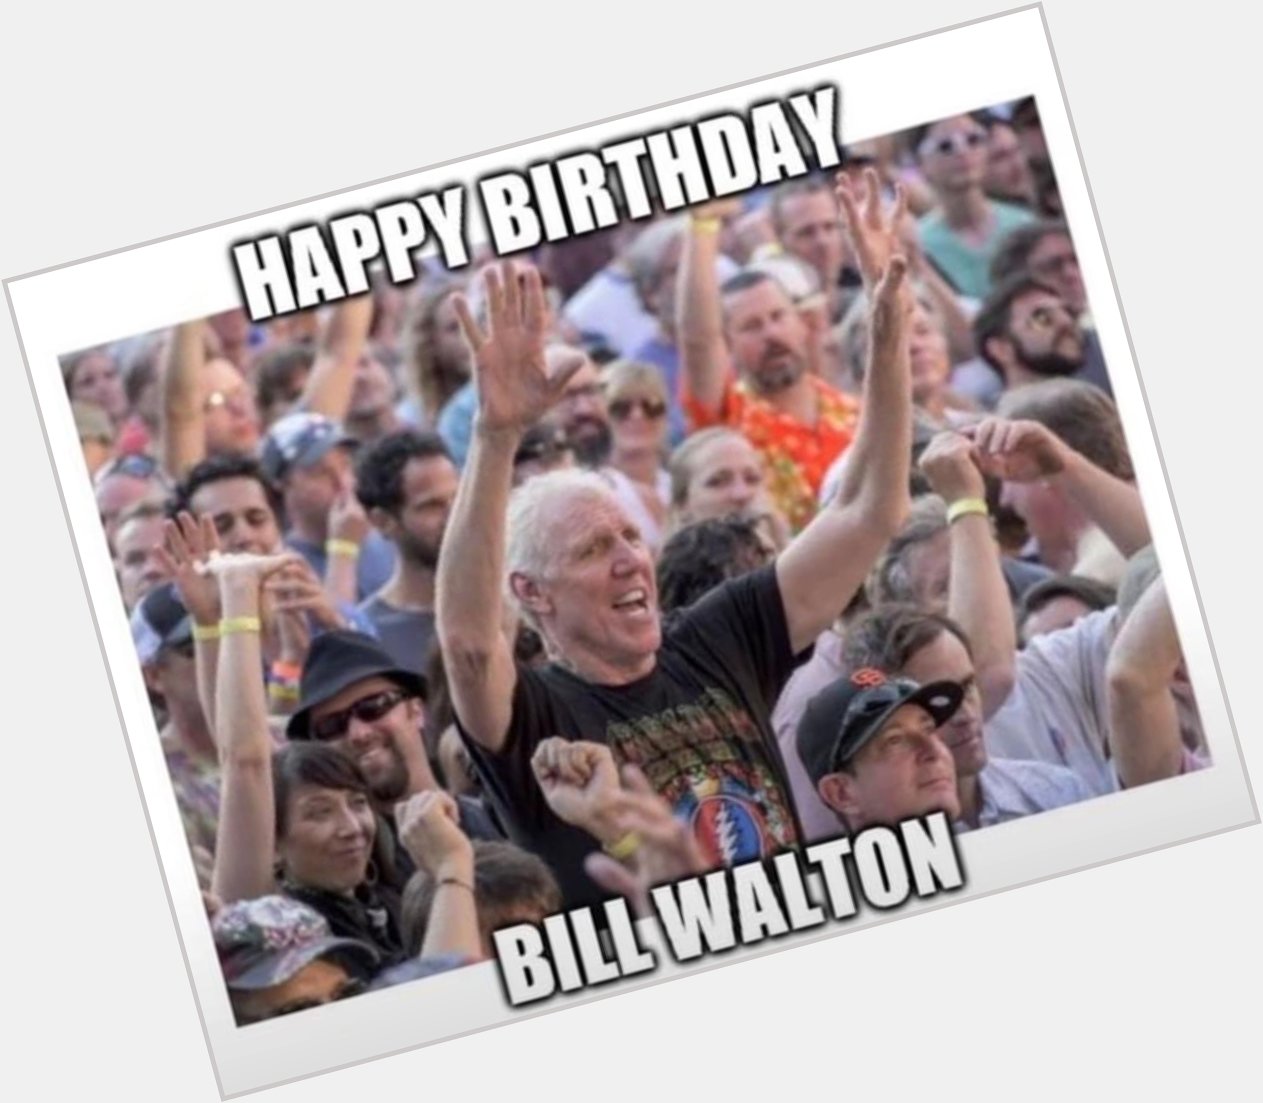 Happy birthday to Bill Walton!   